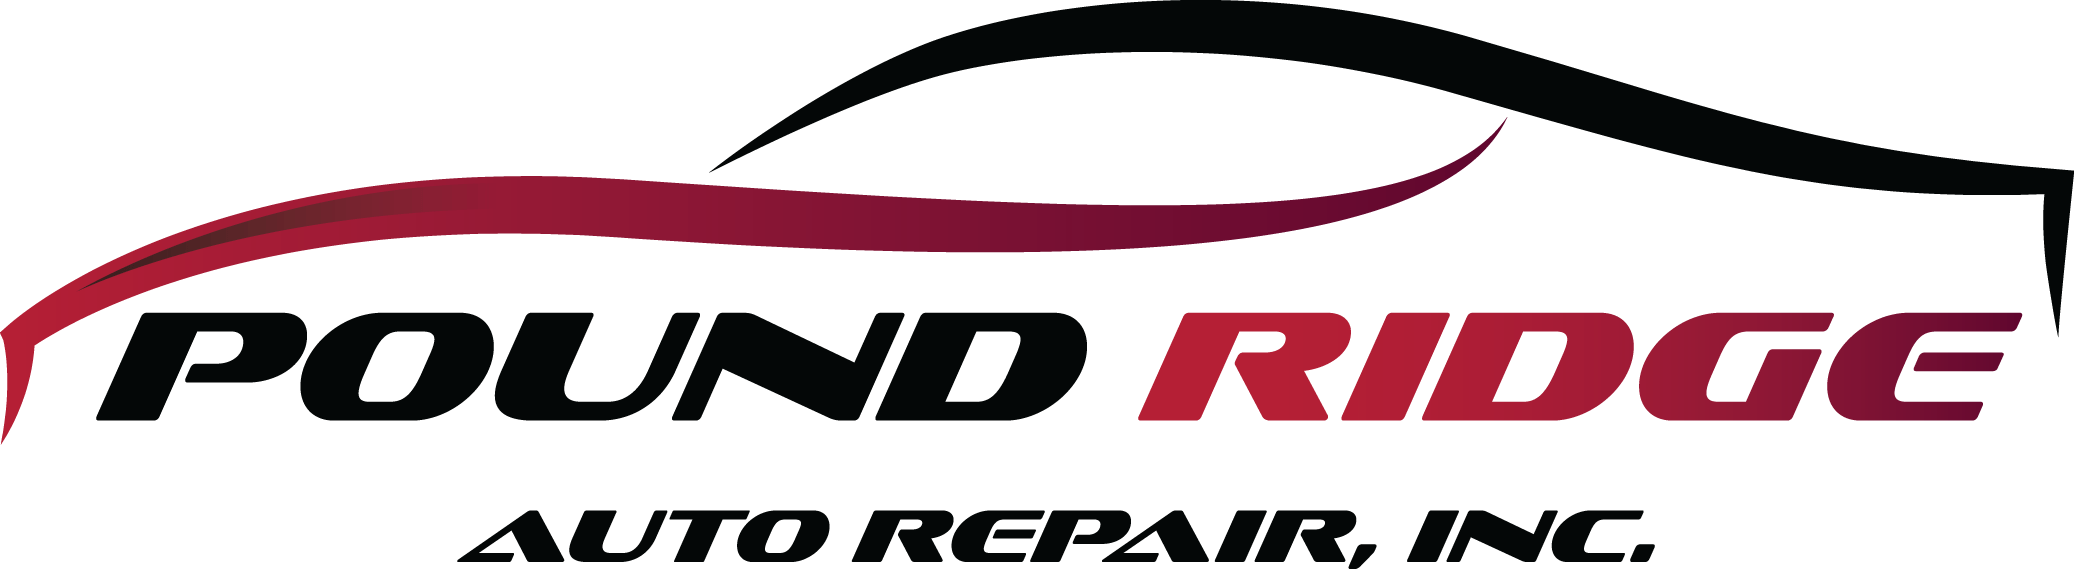 Automotive Repair Logo - Logos - Design by MGCDesign by MGC